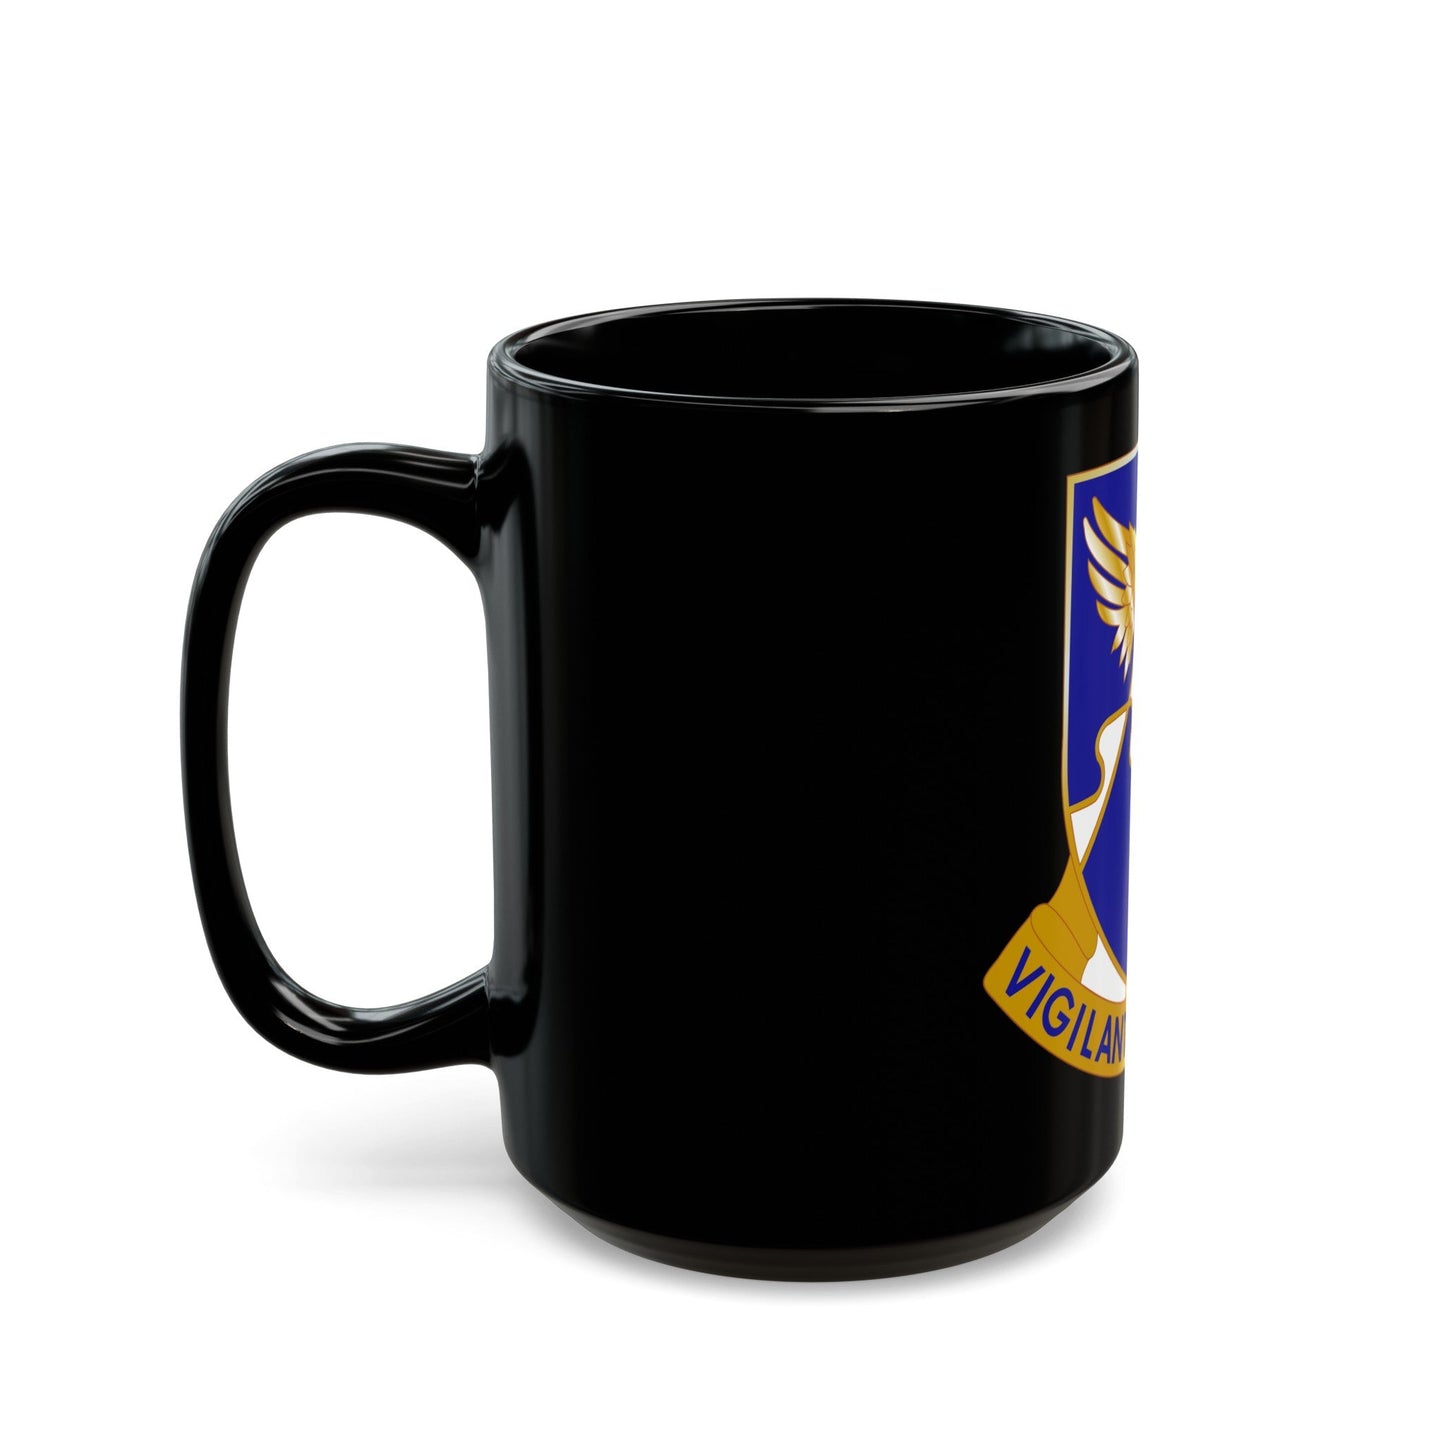 4th Combat Aviation Brigade (U.S. Army) Black Coffee Mug